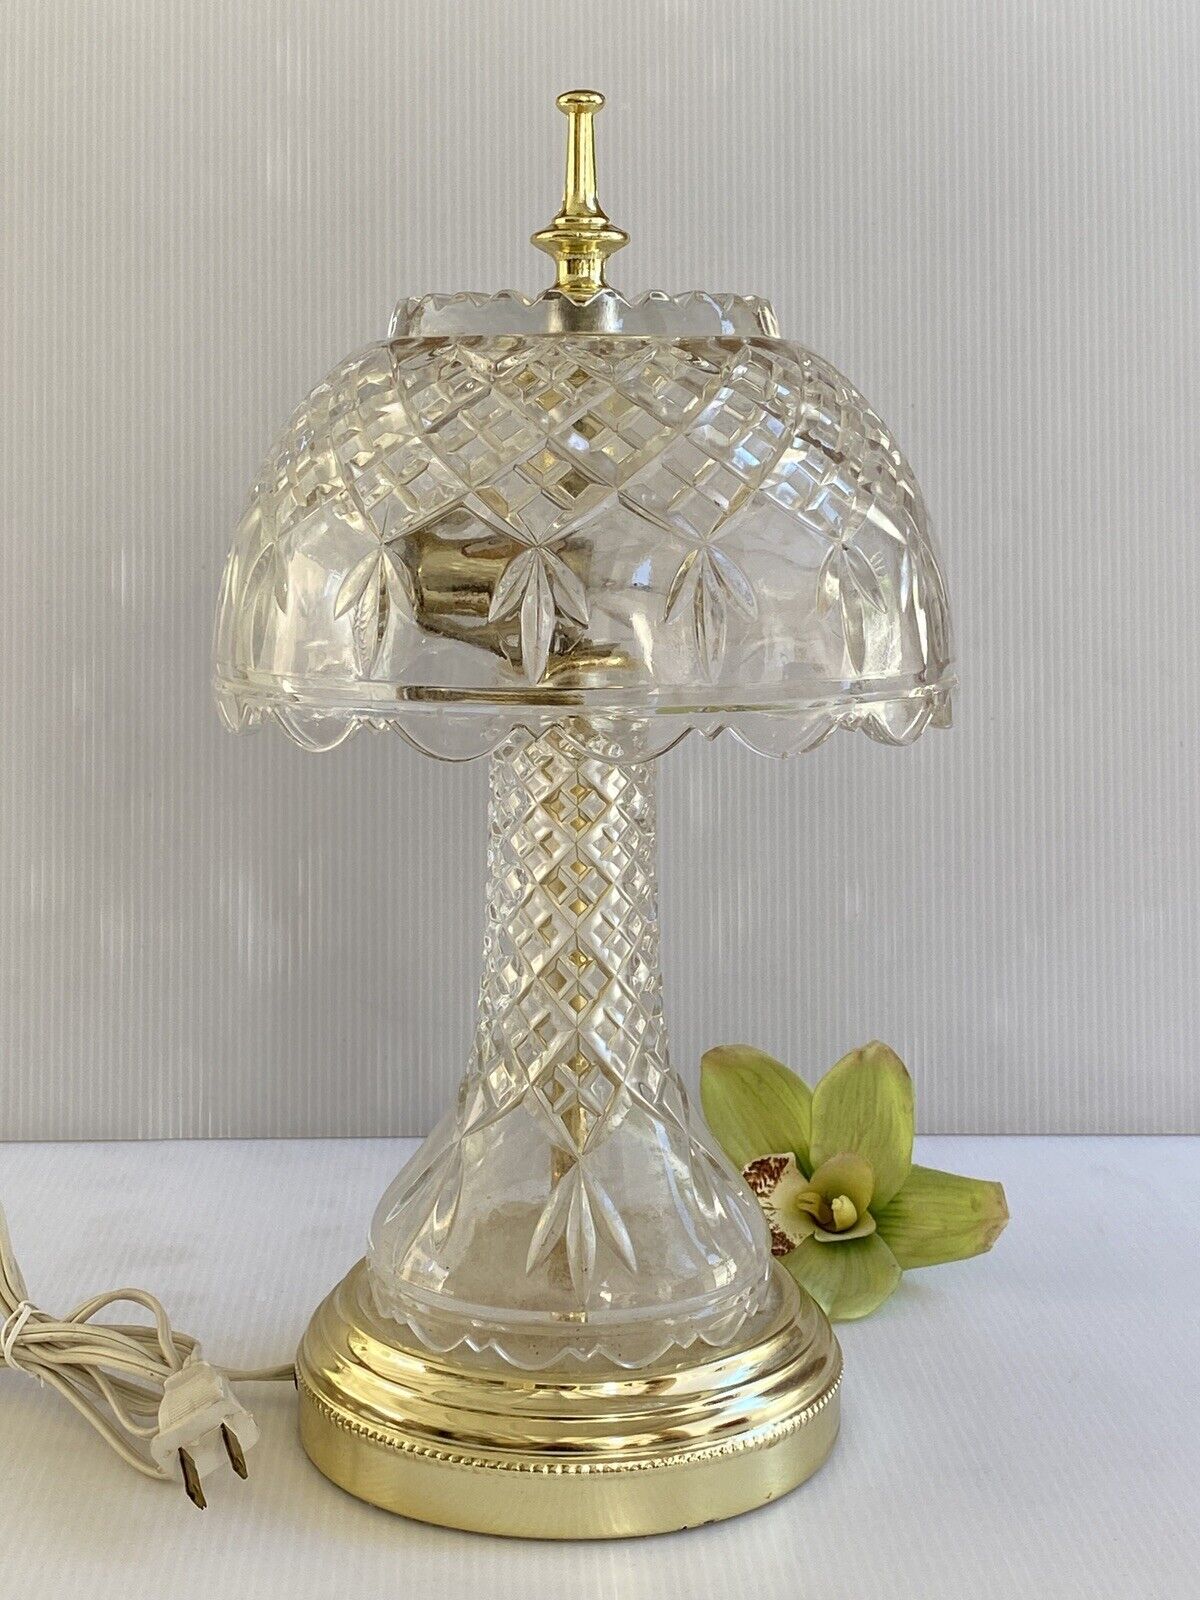 VINTAGE Lead Crystal Table Lamp Heavy Cut Glass Vanity Boudoir Accent Nightlight